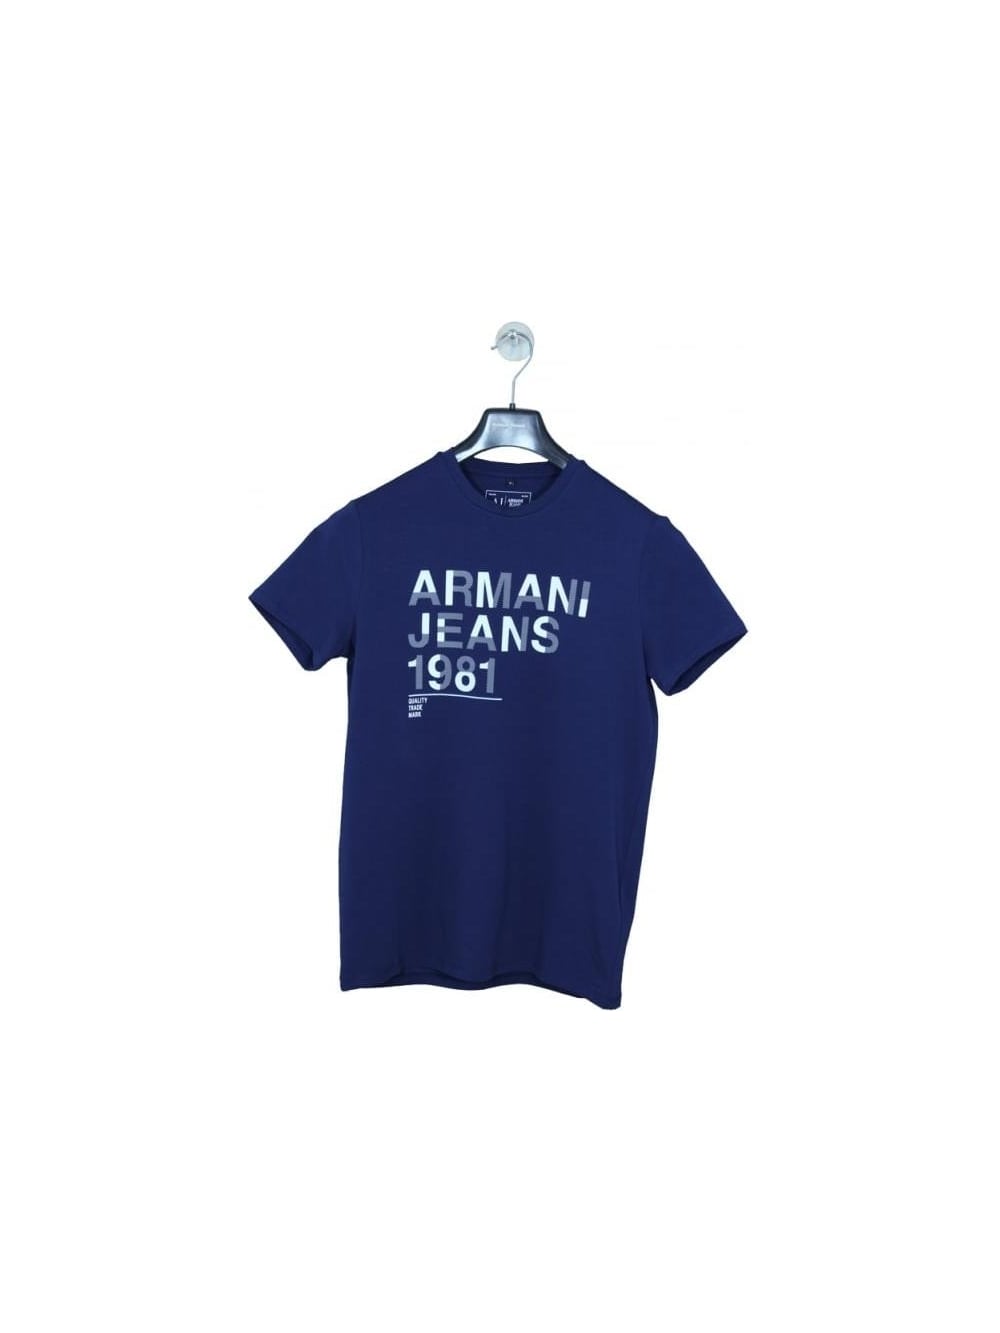 Flock Logo - Armani Jeans Half Print Flock Logo T Shirt in Navy/White - Northern ...